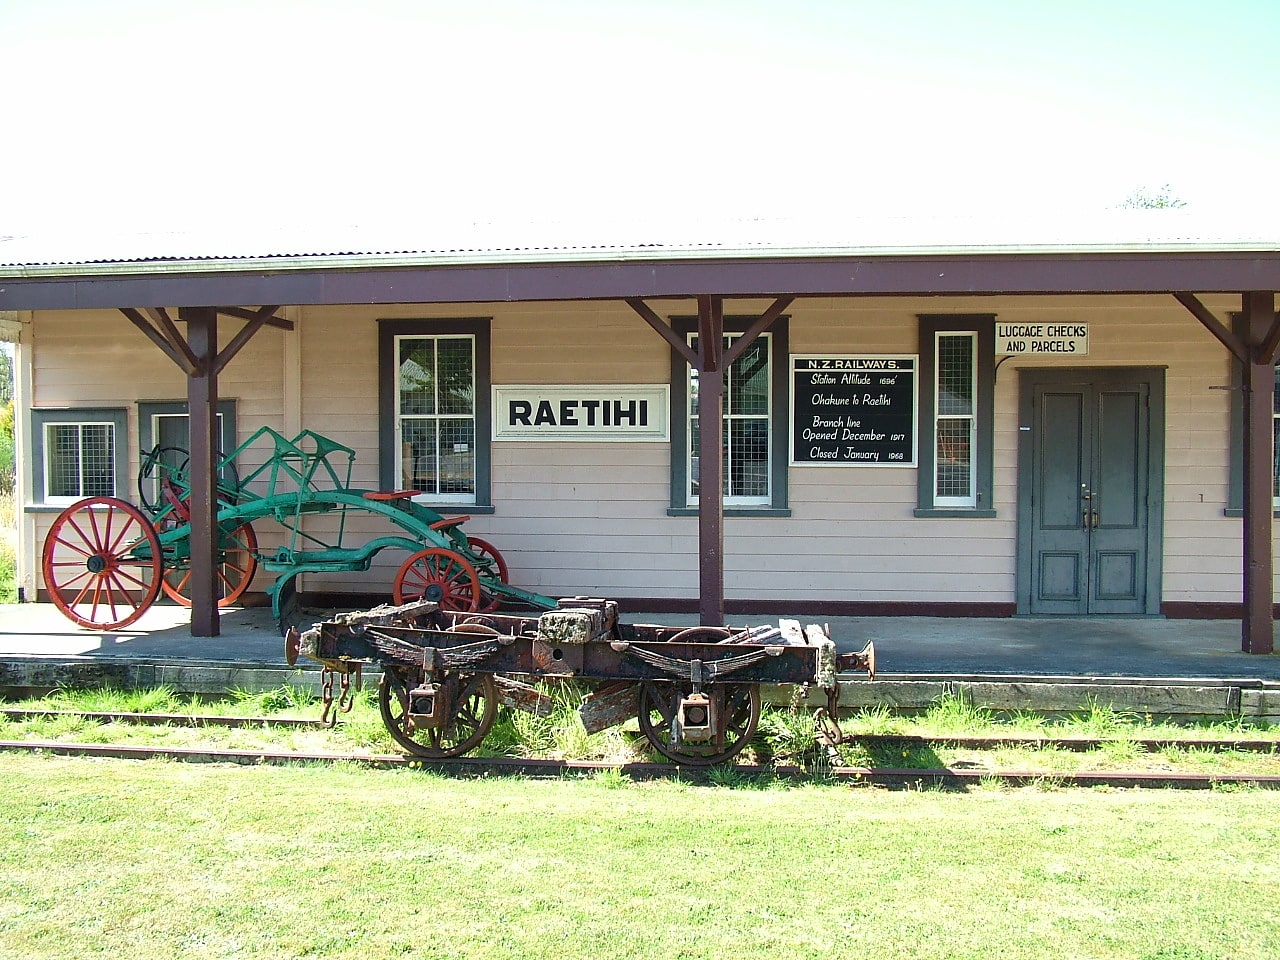 Raetihi, New Zealand